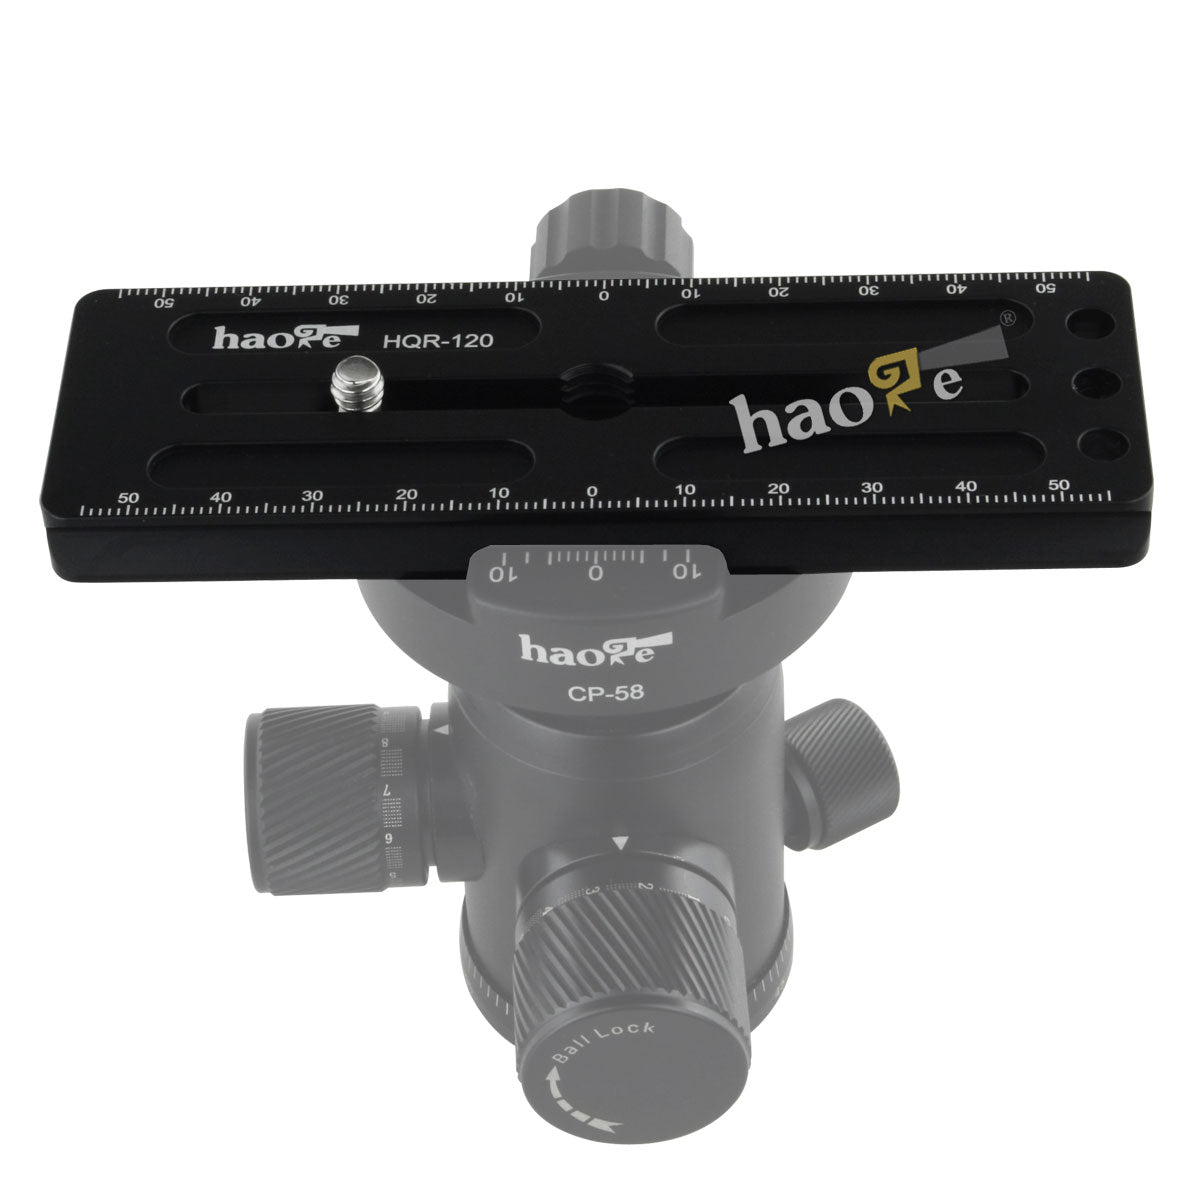 Haoge 120mm Multi-purpose Long Quick Release Extender Rail Sliding Plate for Camera Tripod Ballhead Clamp fit Benro Arca Swiss Sunwayfoto